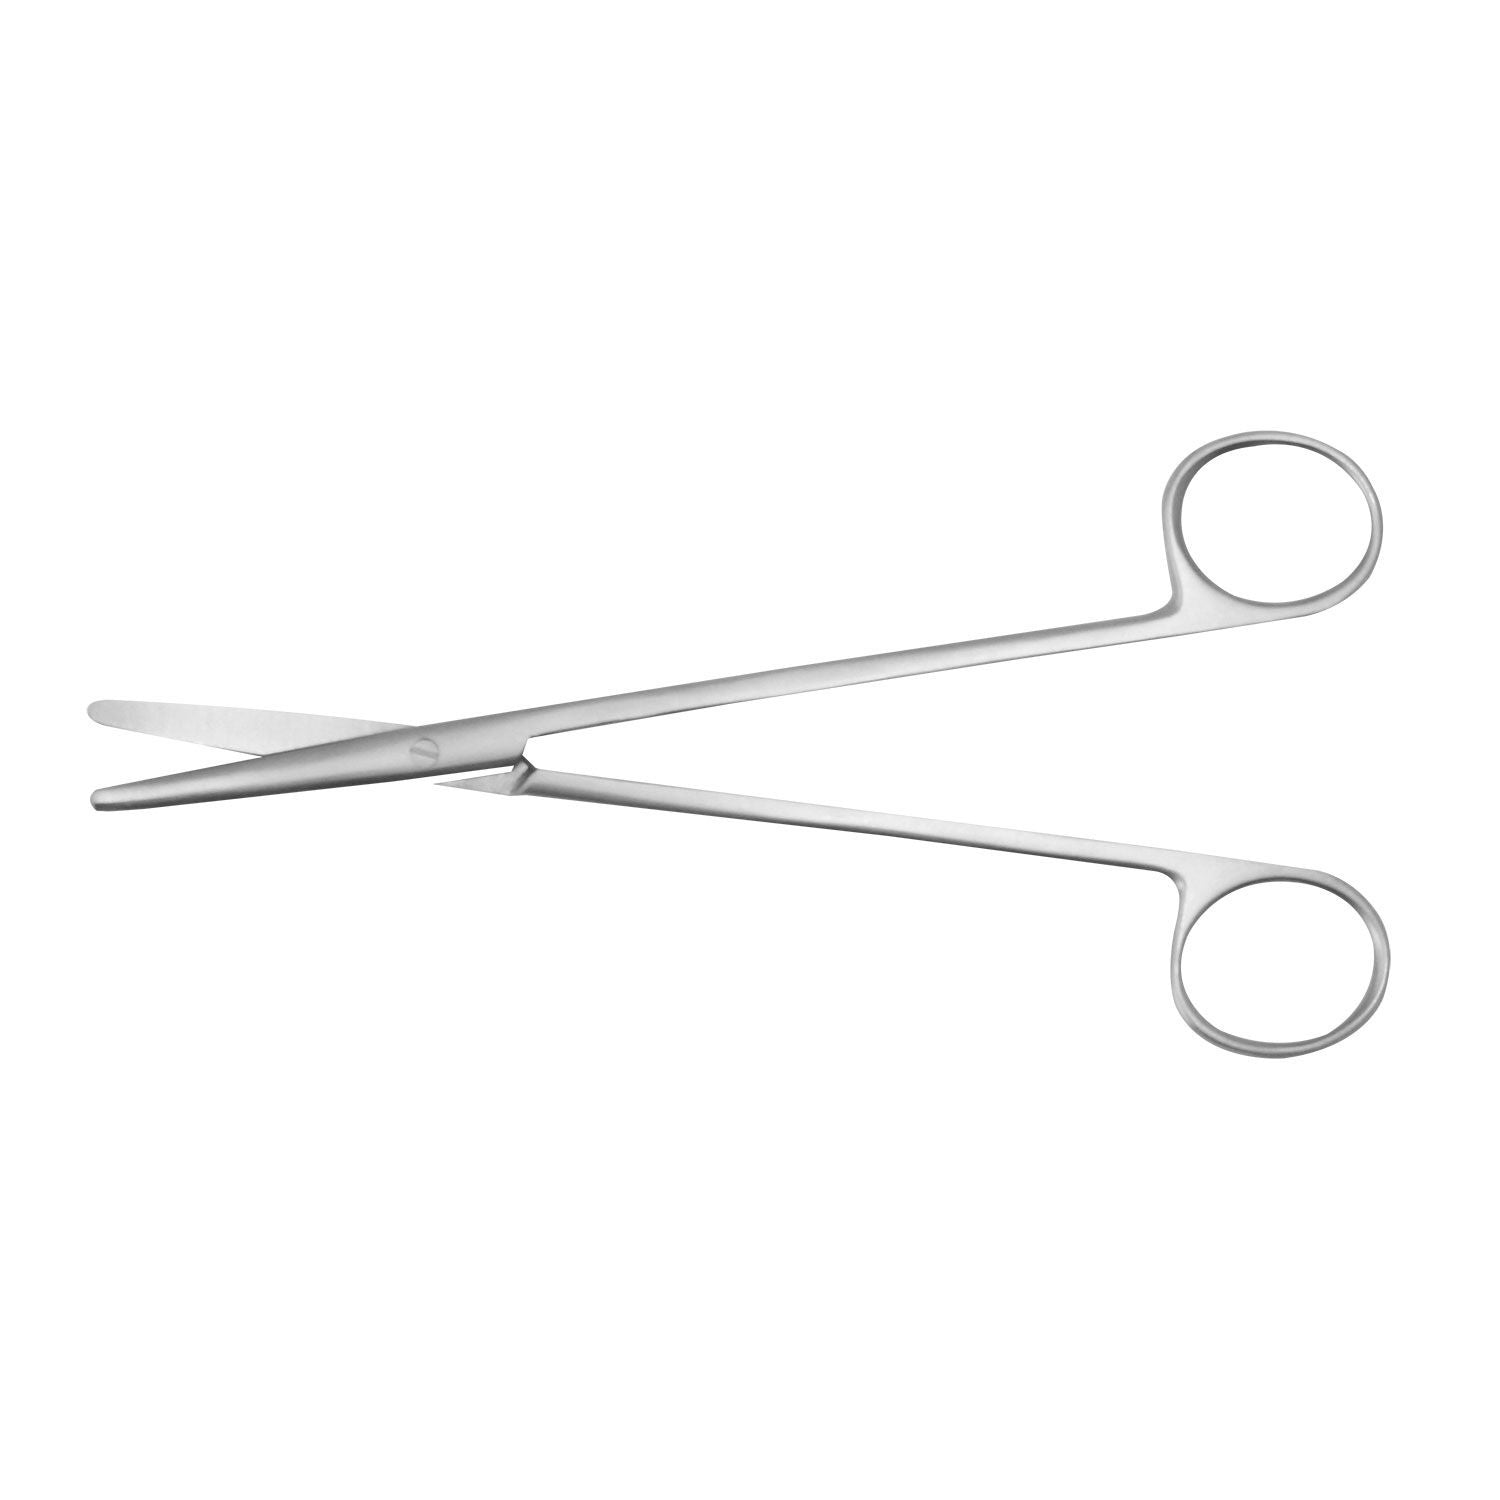 Instramed Metzenbaum Scissors | Curved | 18cm | Single